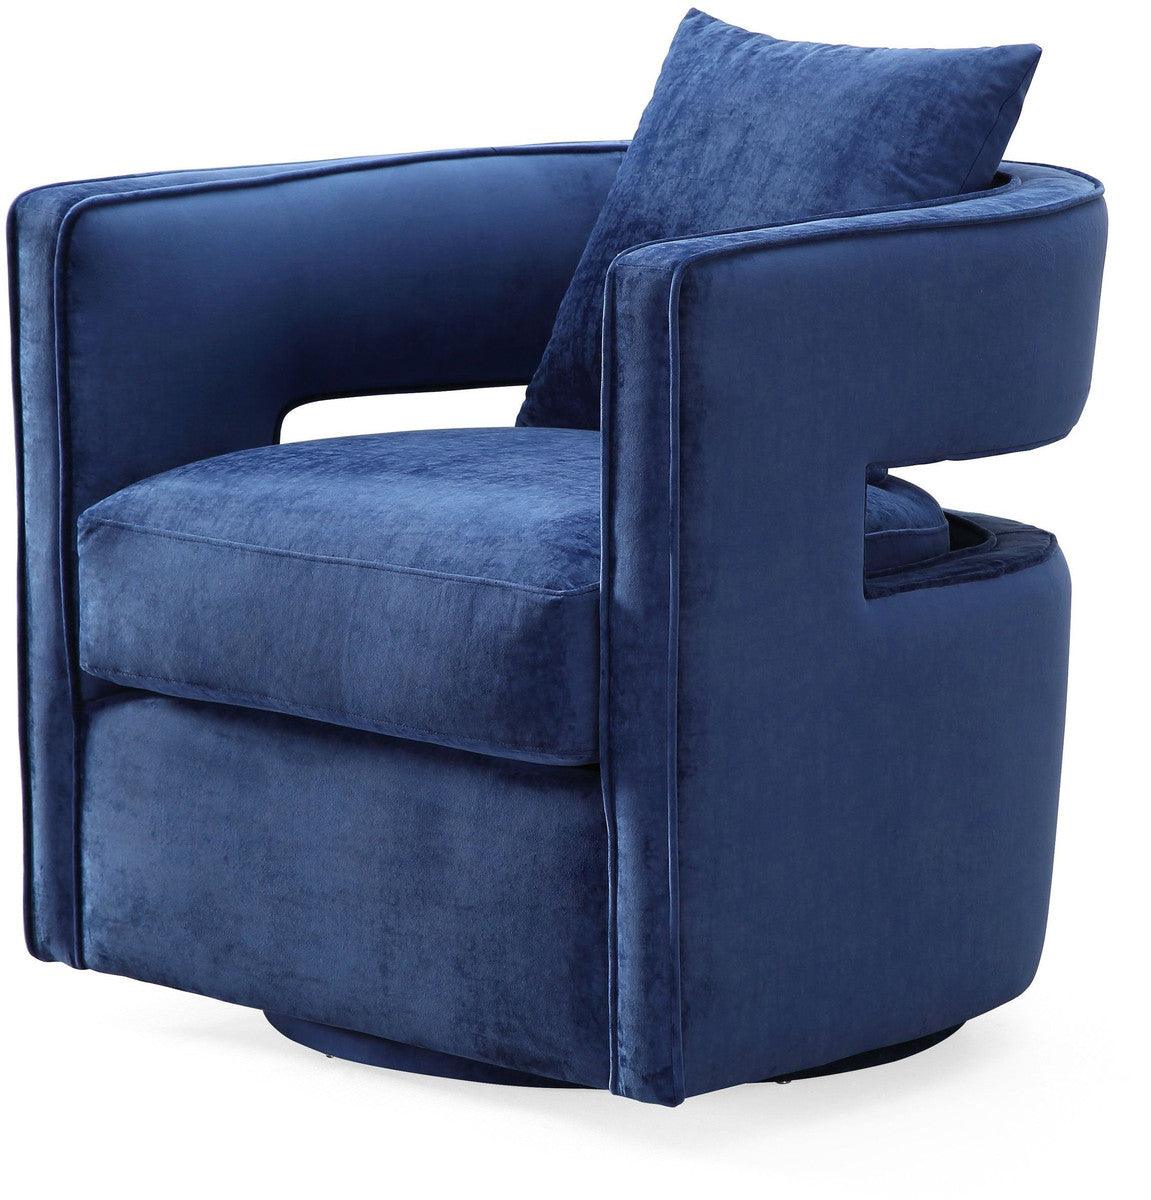 Kendrick Navy Swivel Chair - Euro Living Furniture